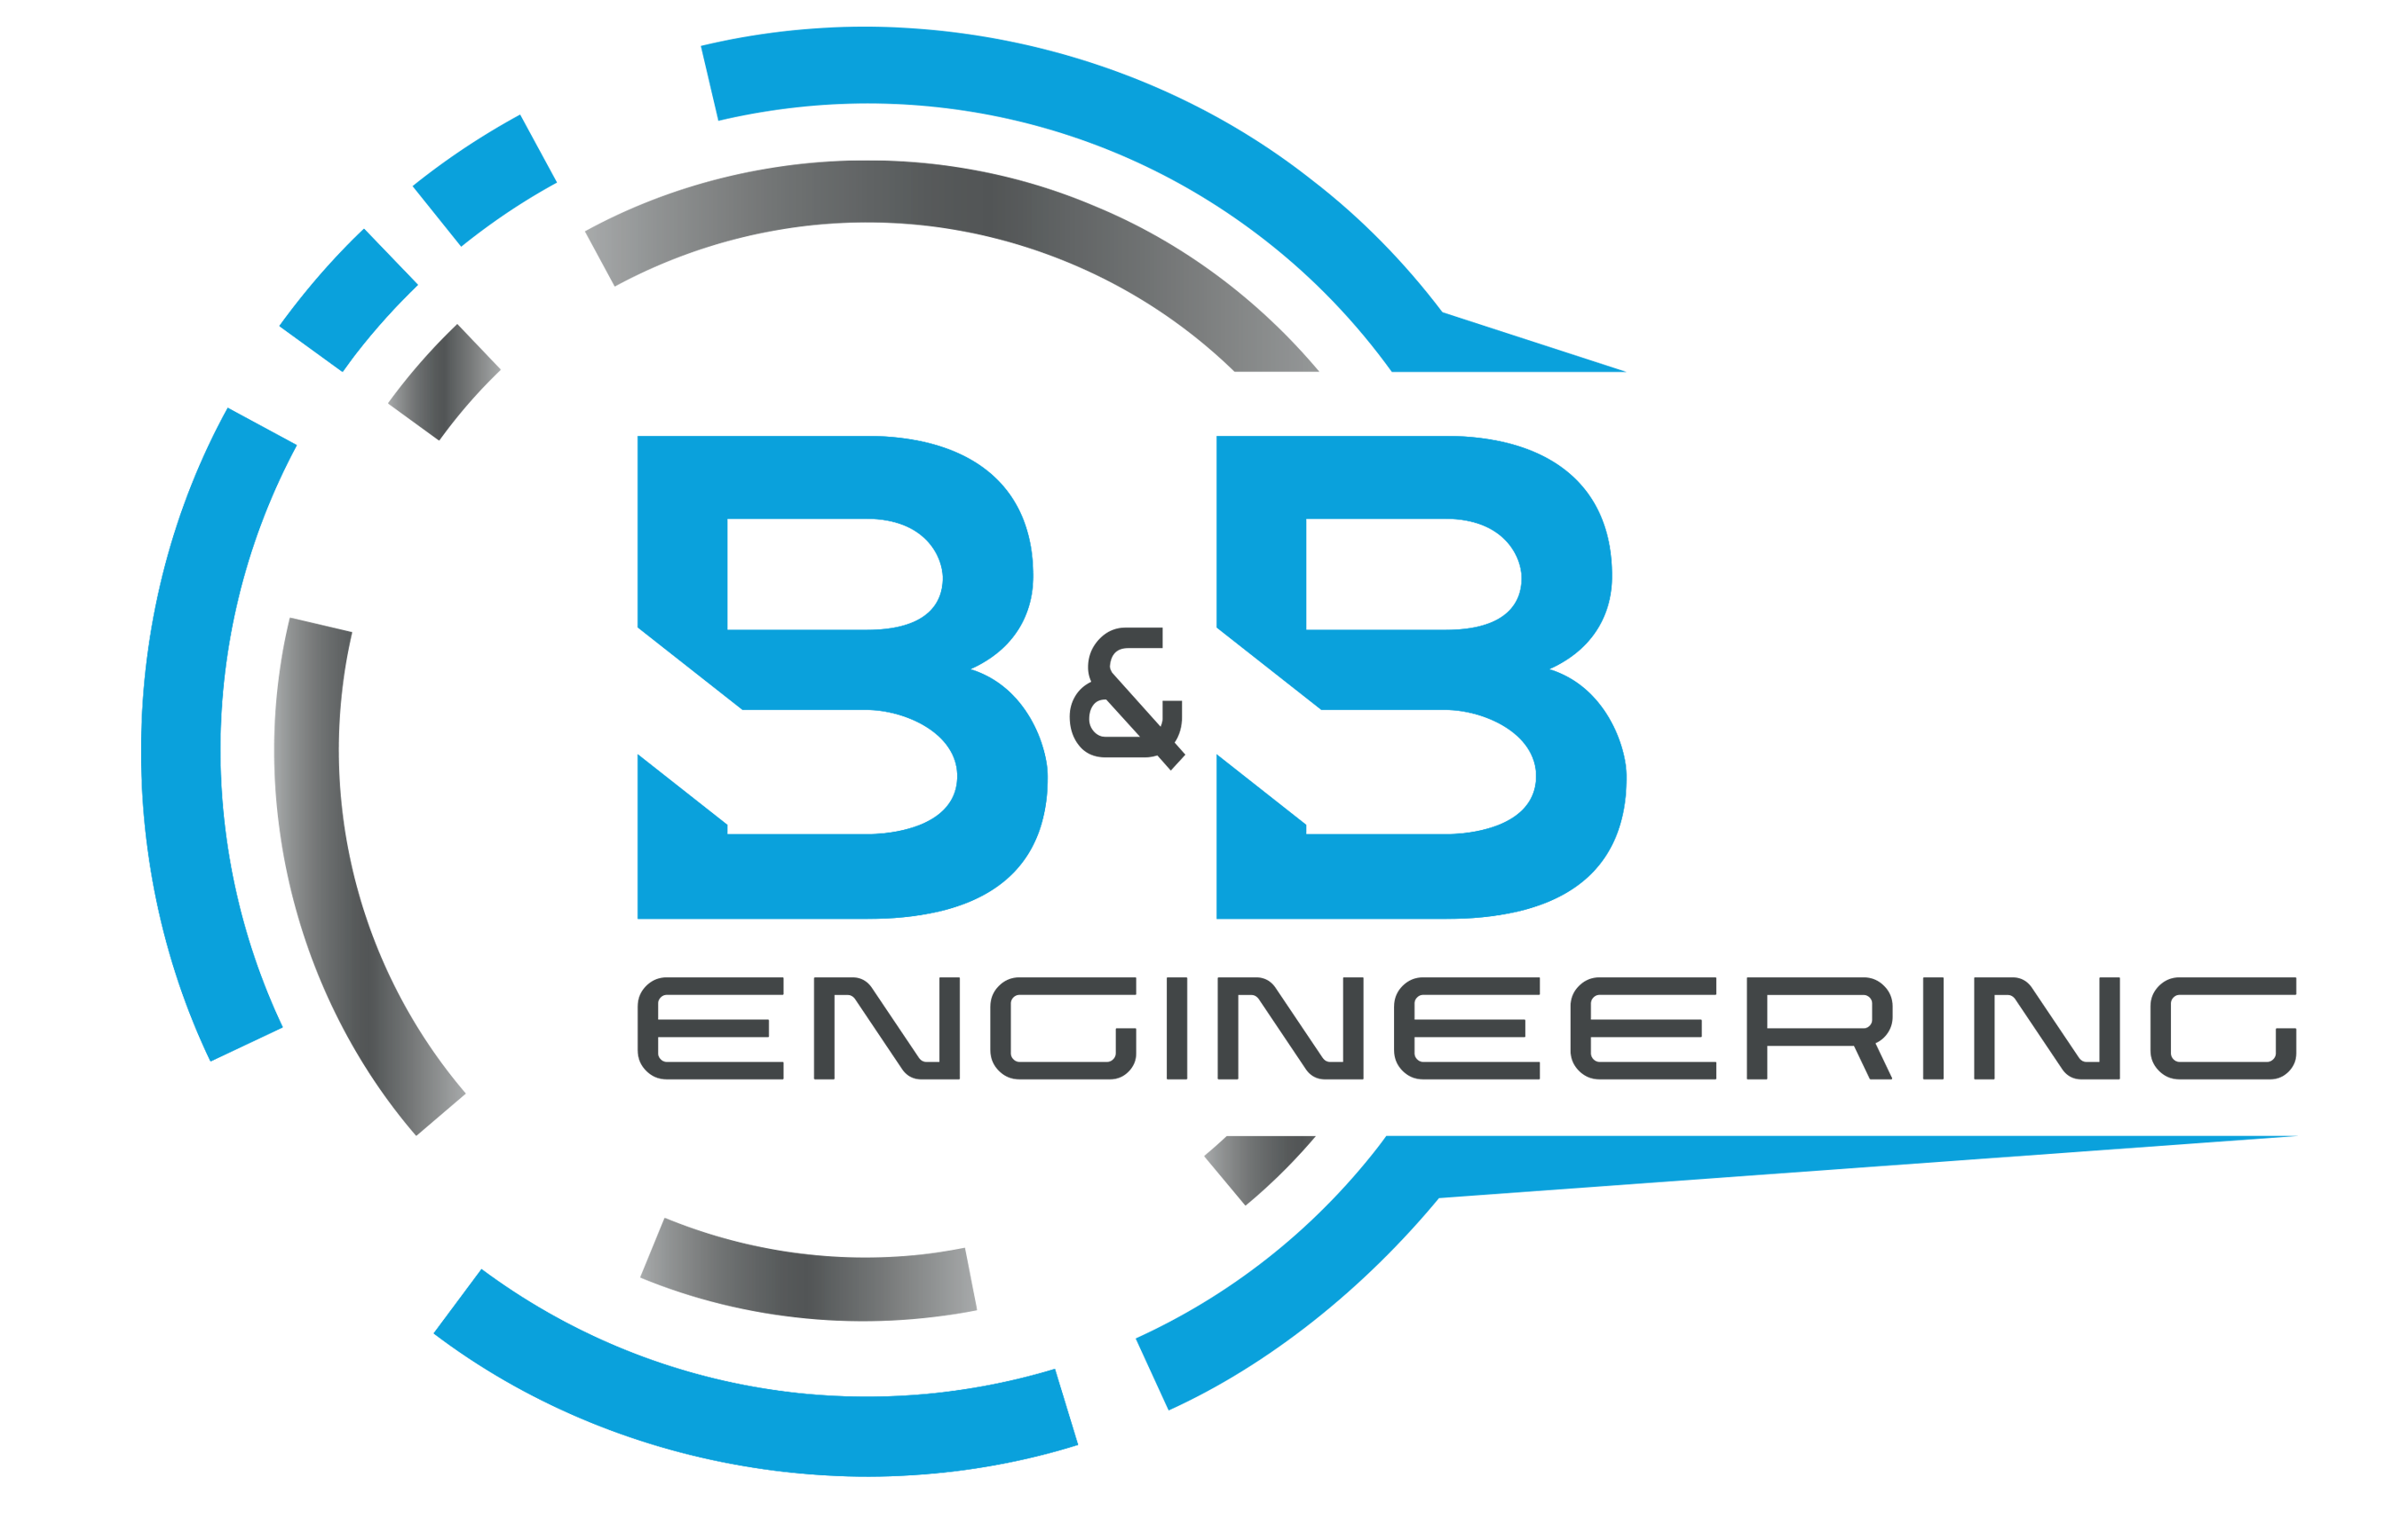 B&B Engineering